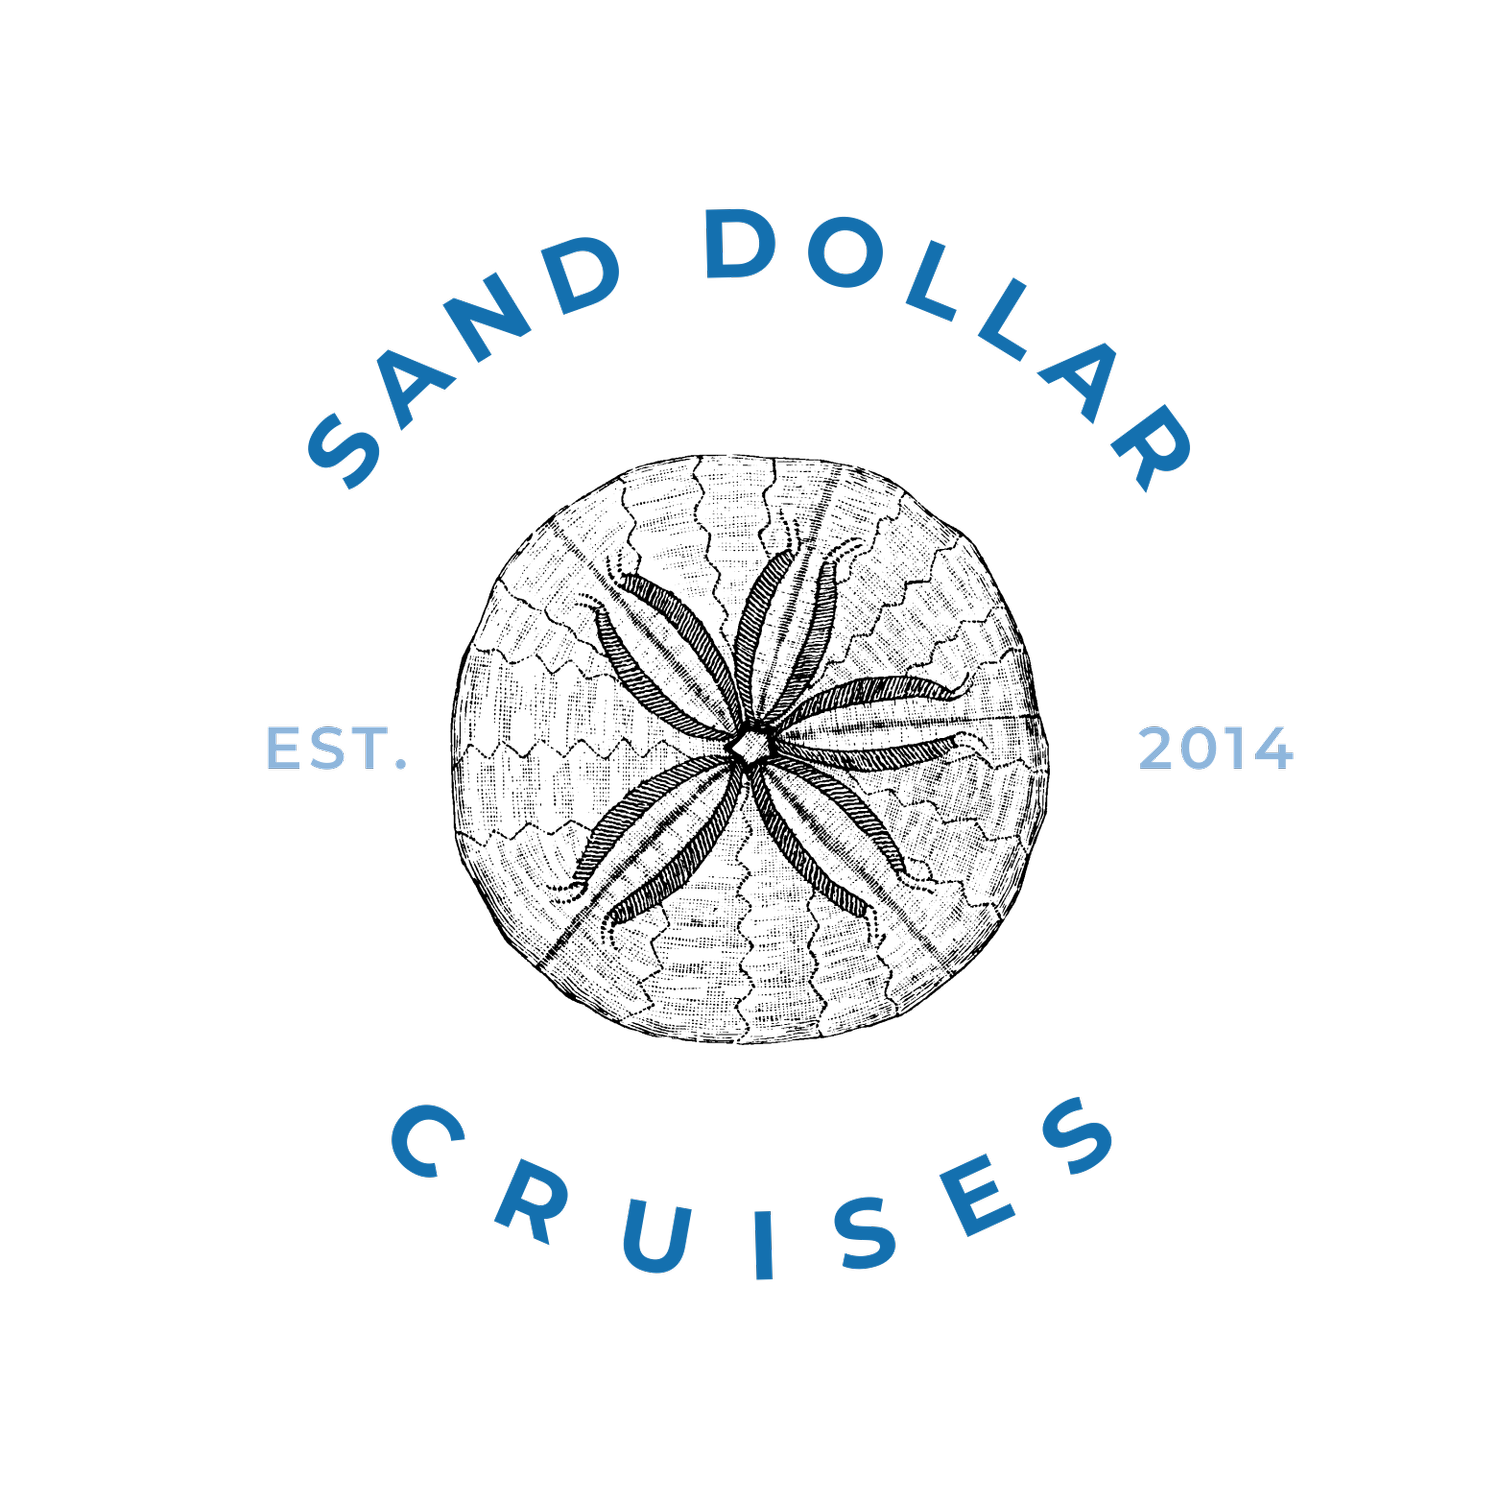 Sand Dollar Cruises